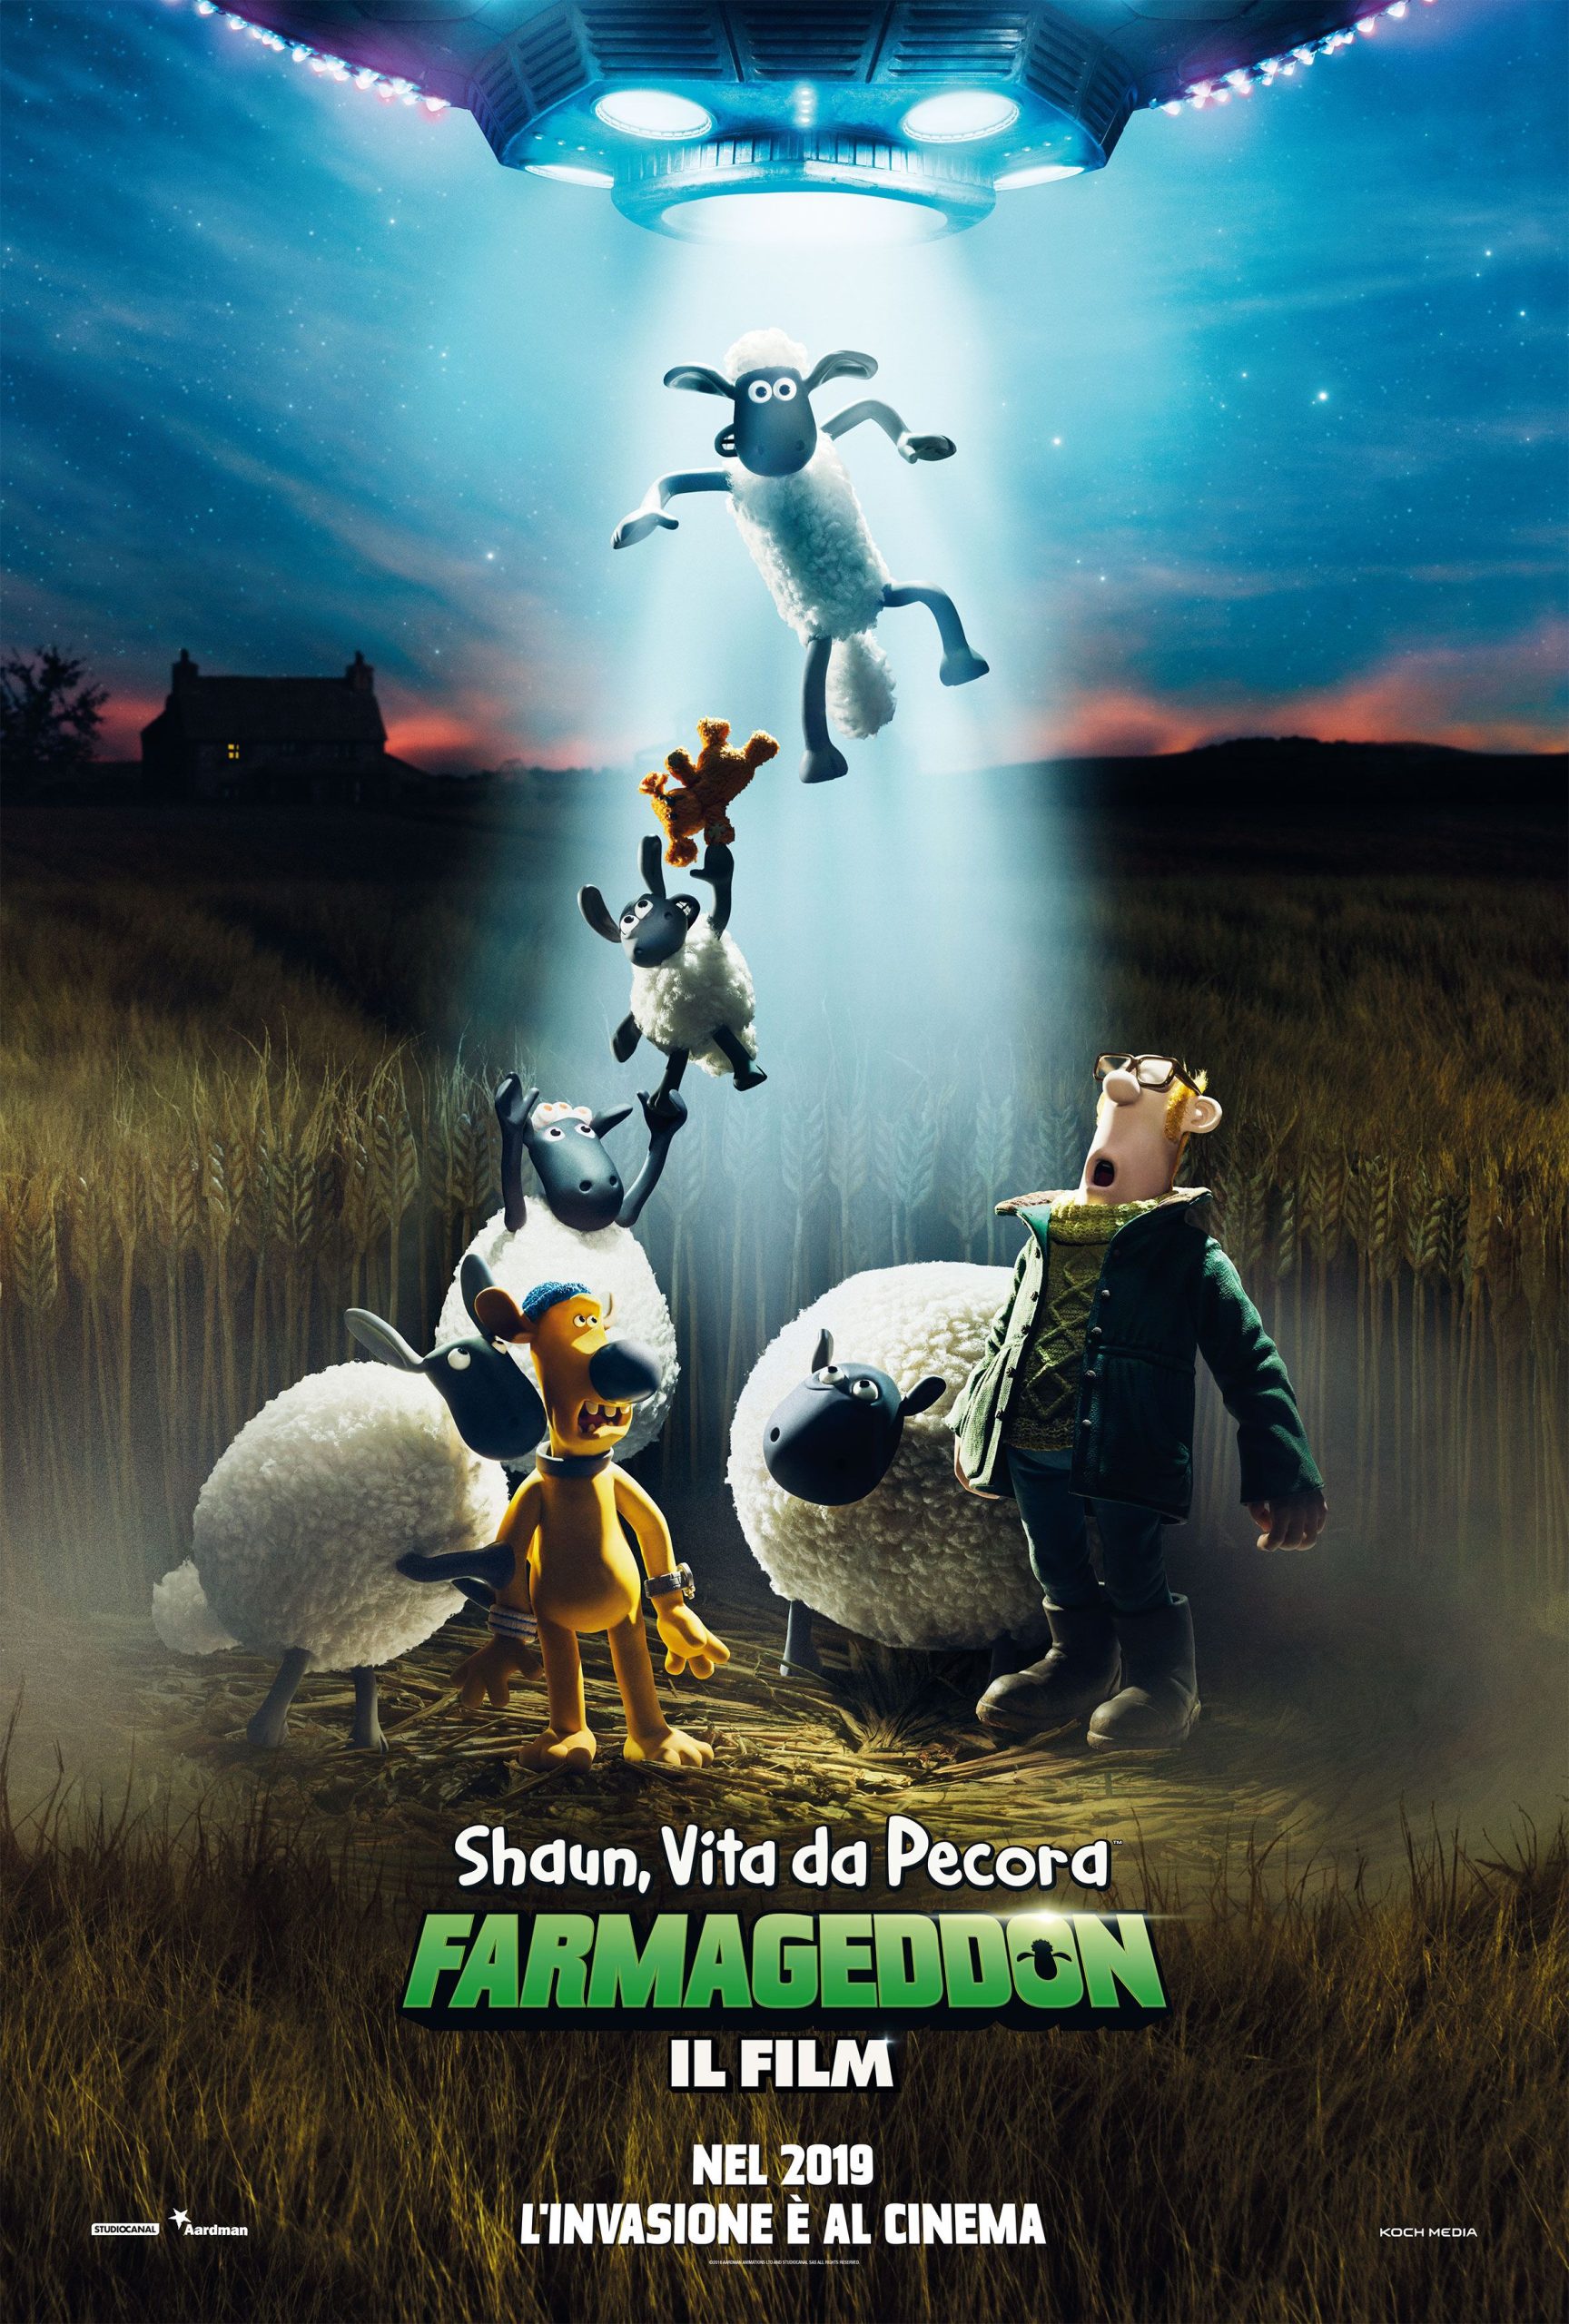 Shaun vita da pecora: Farmageddon - il film